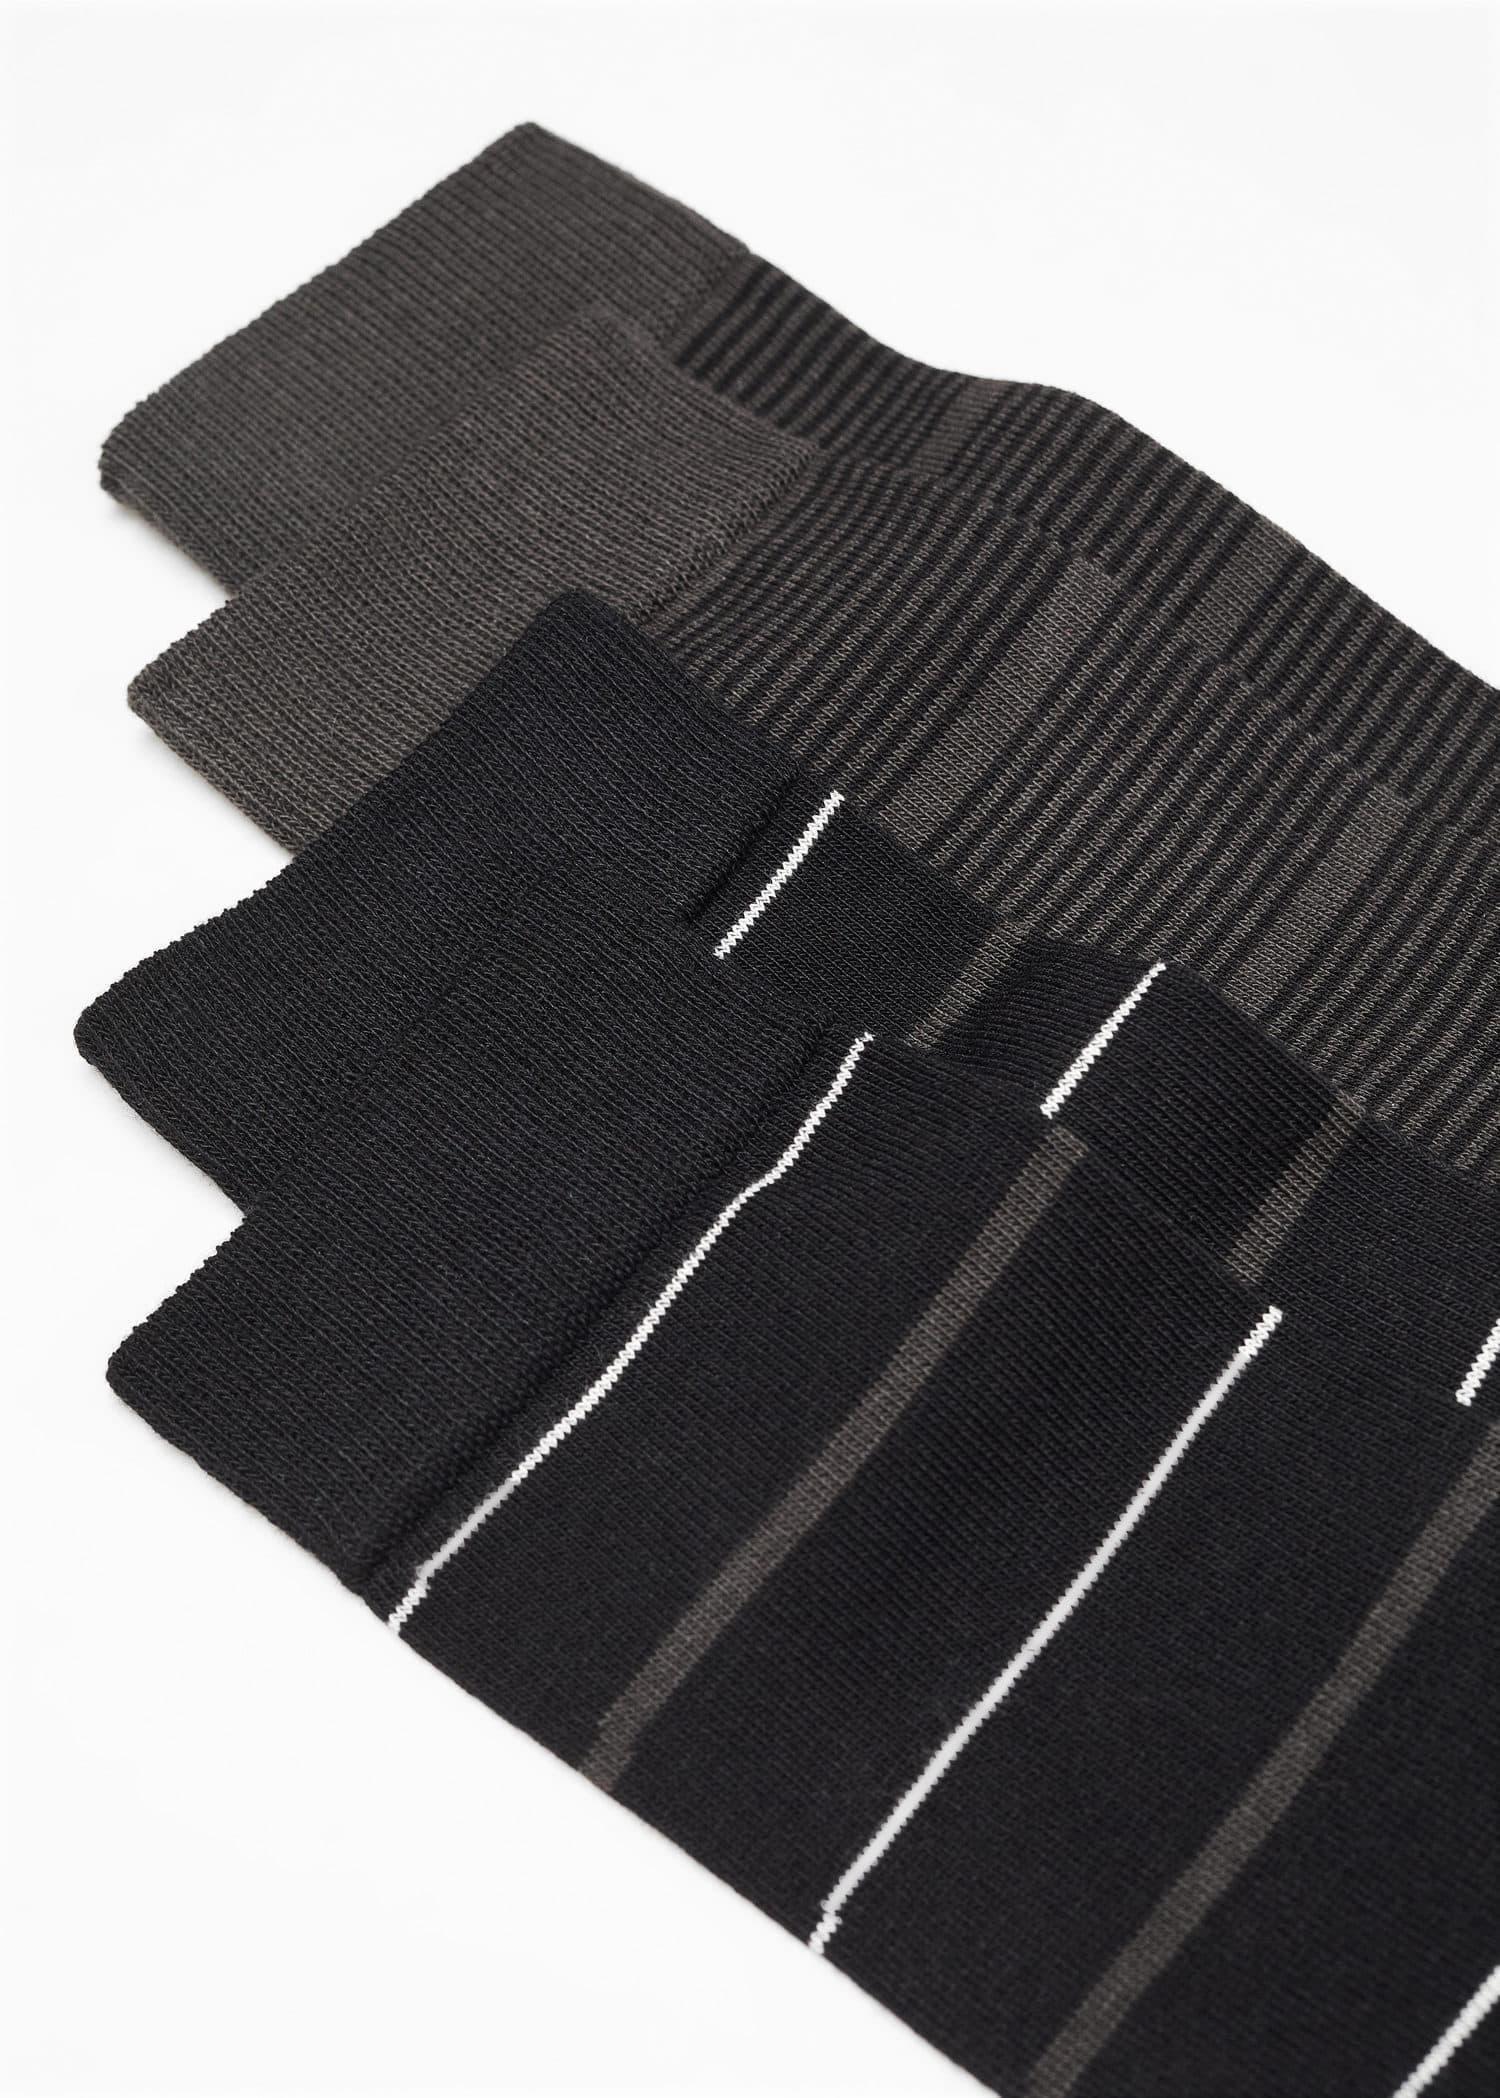 Mango - Black Striped Cotton Socks, Set Of 2